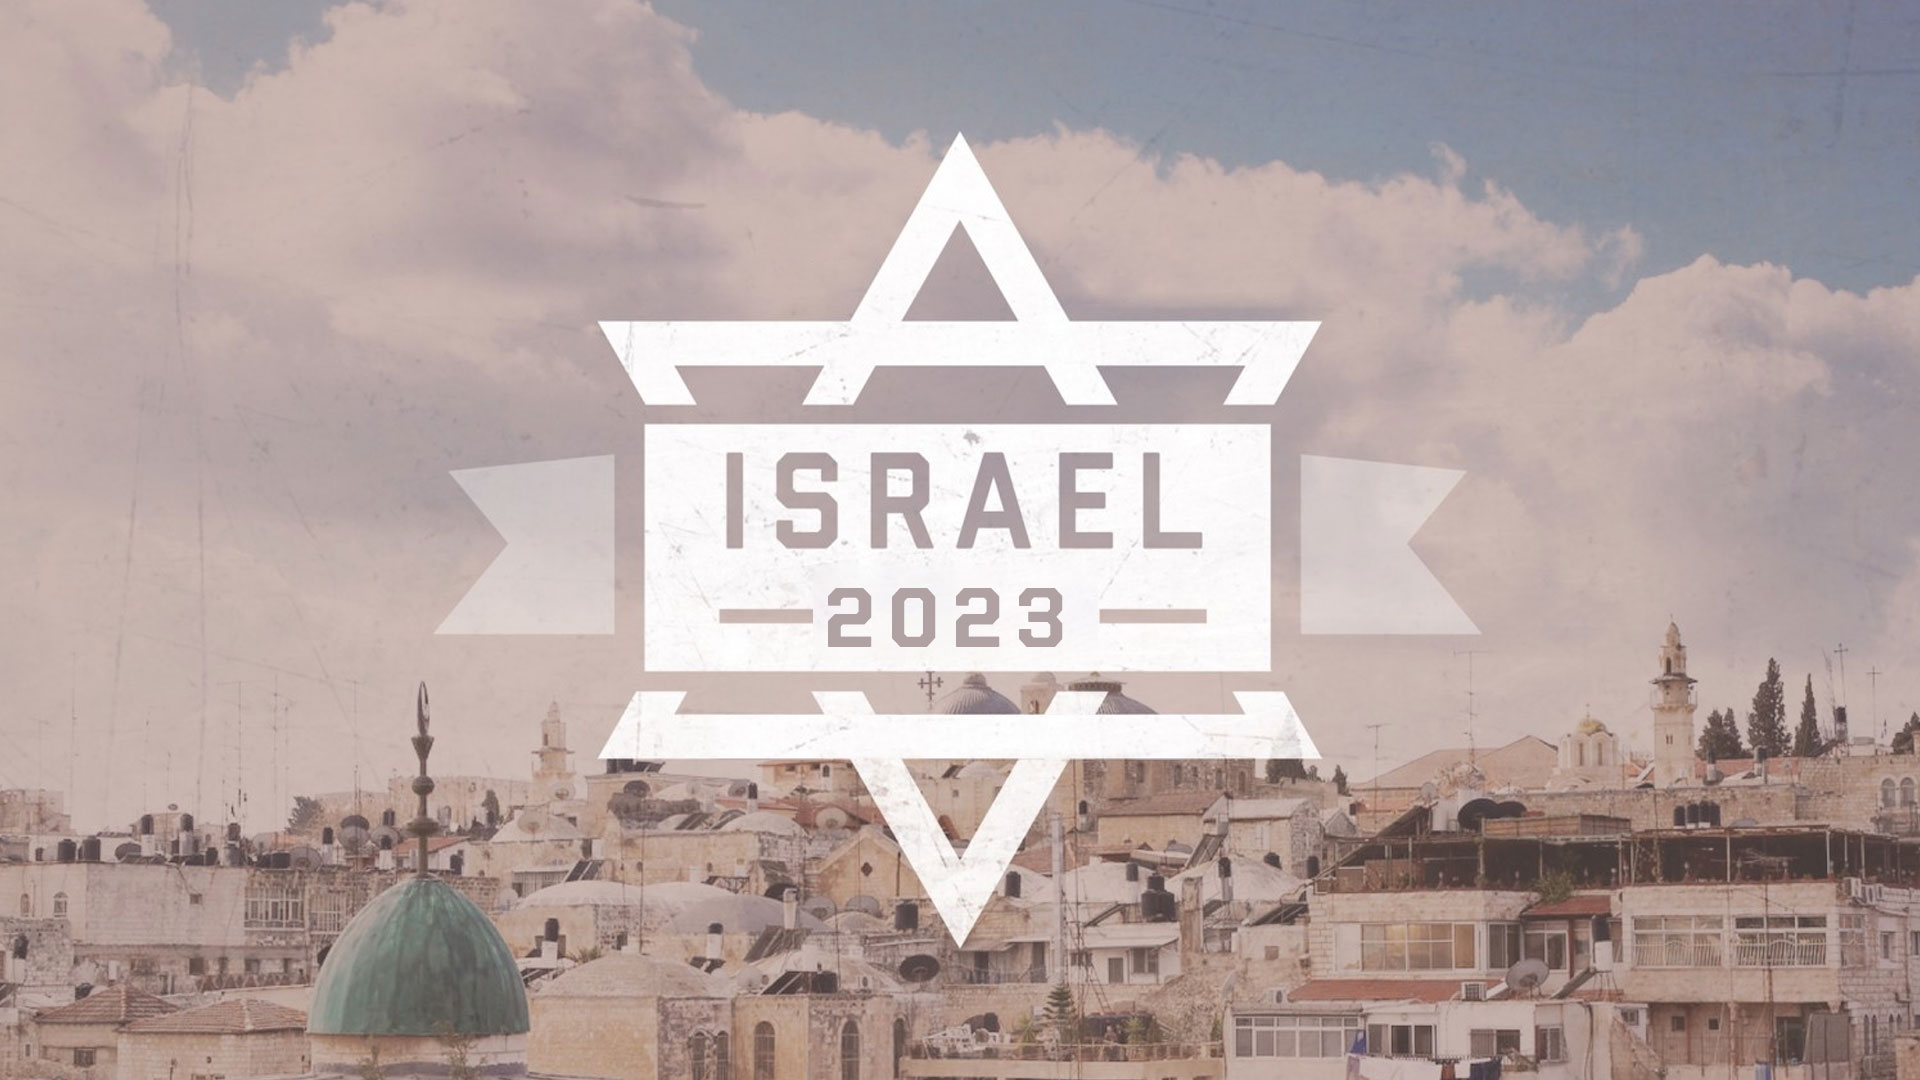 Israel 2023